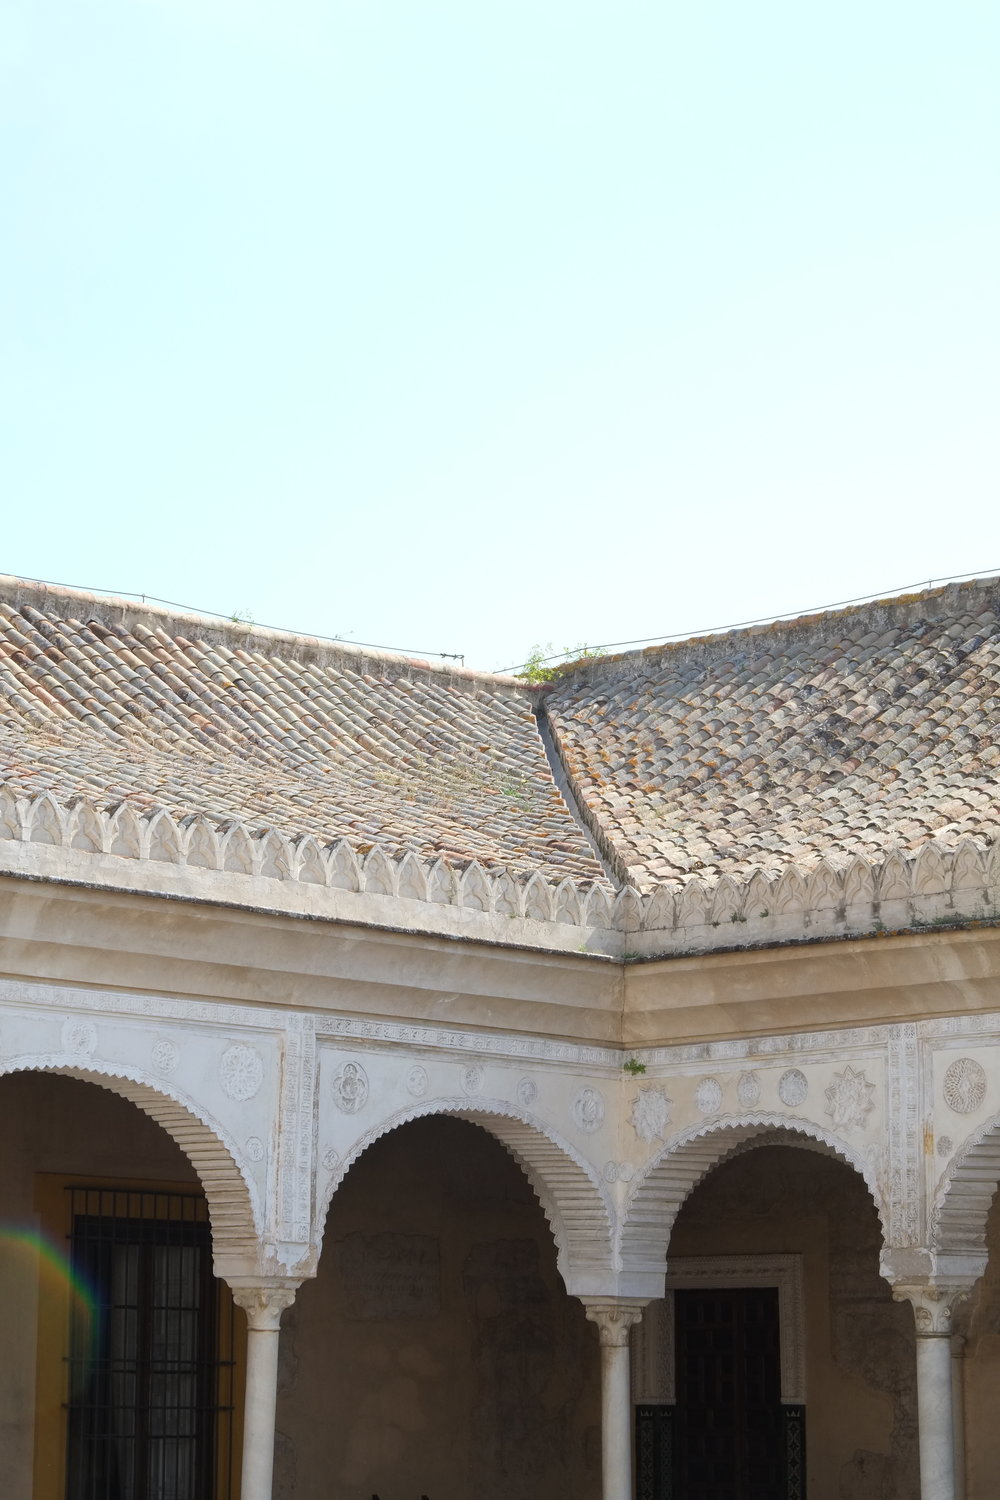 Roof top of Casa de Pilatos